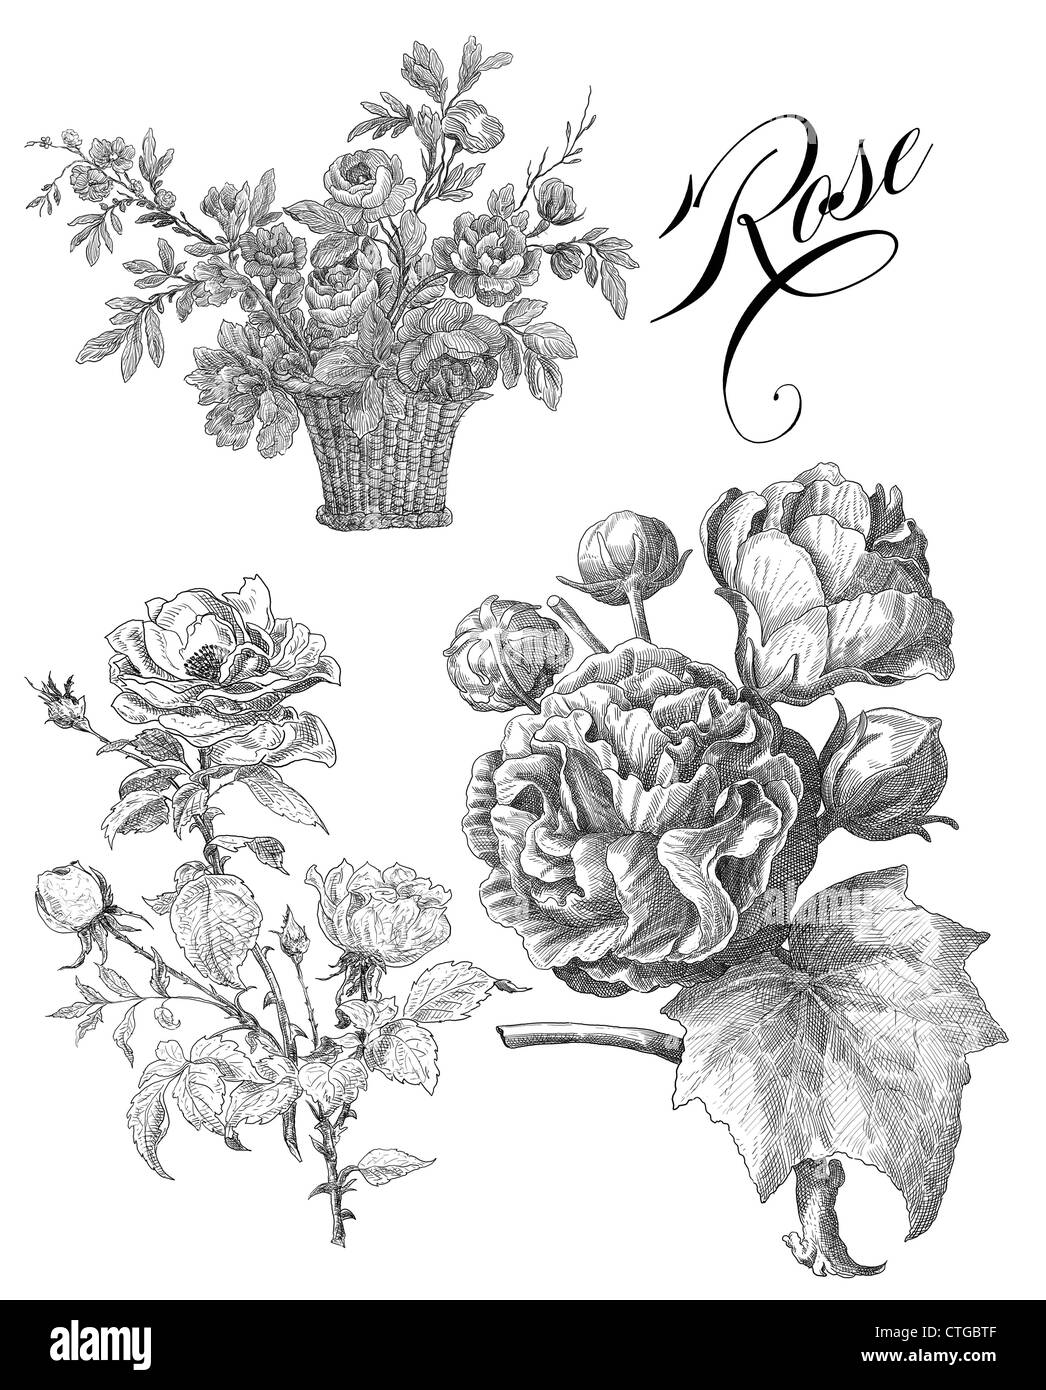 Old rose illustration Stock Photo